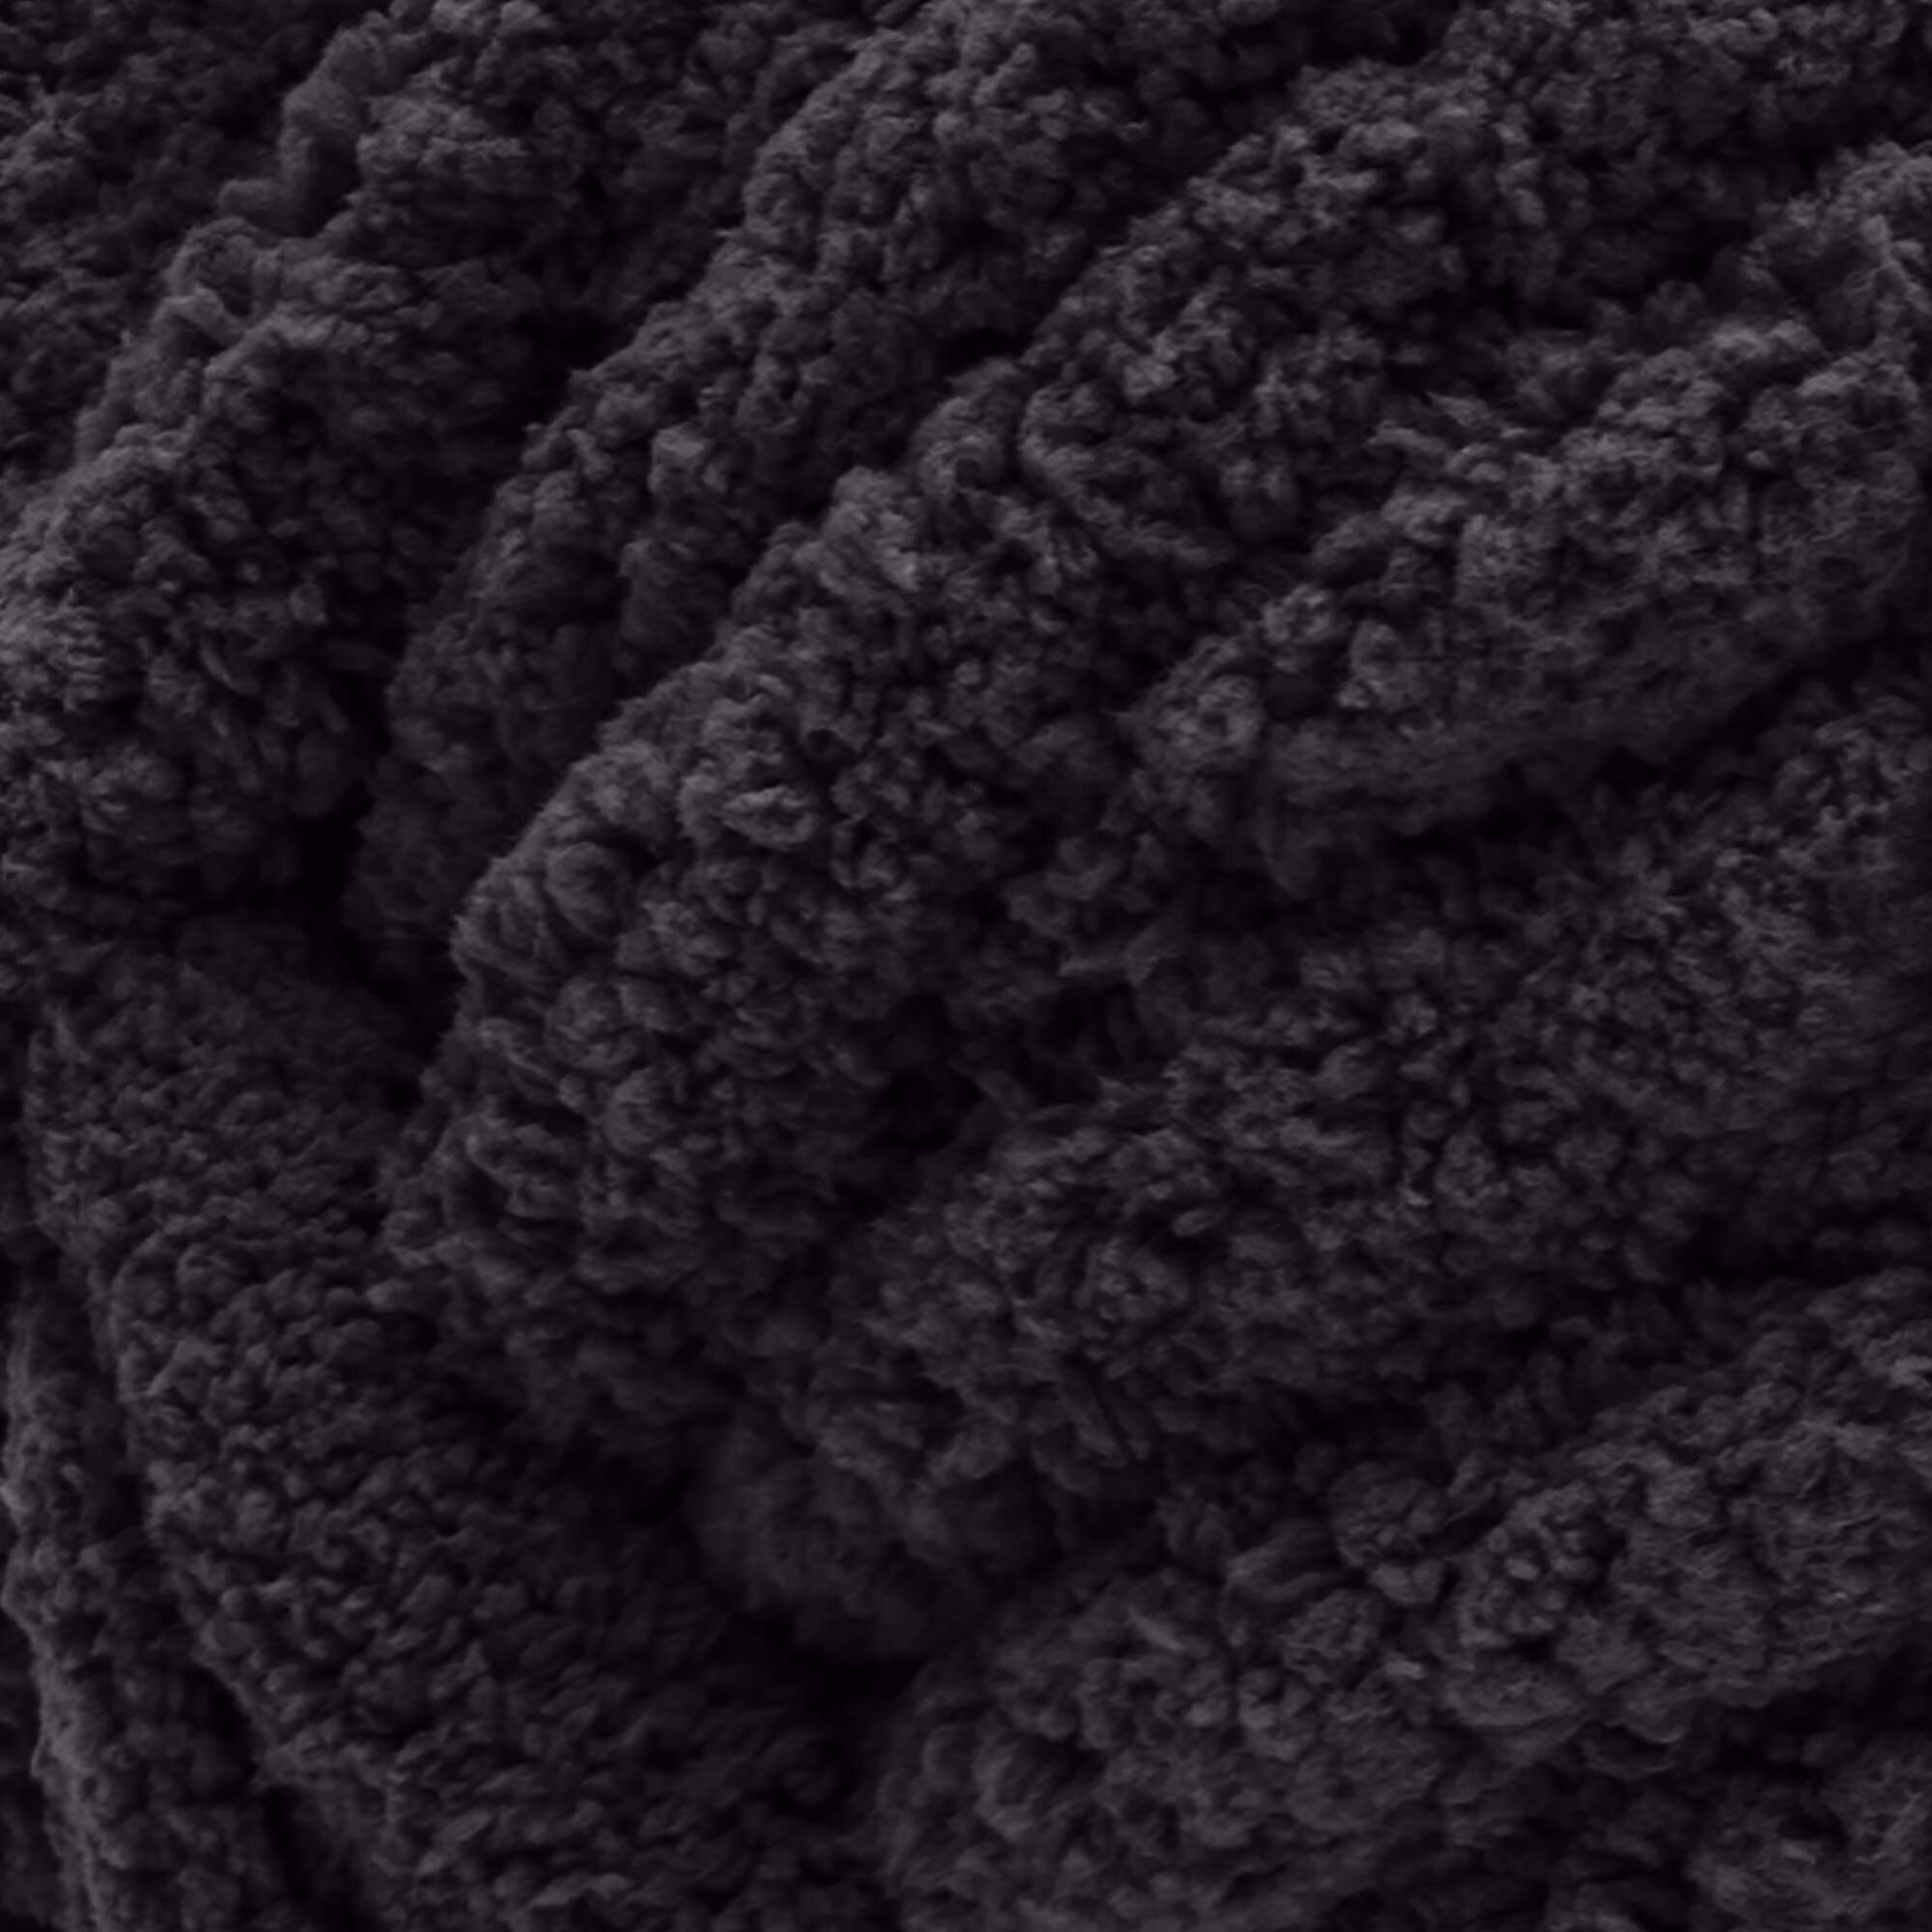 Bernat Blanket Extra Thick Yarn (600g/21.2oz) - Discontinued Shades Coal